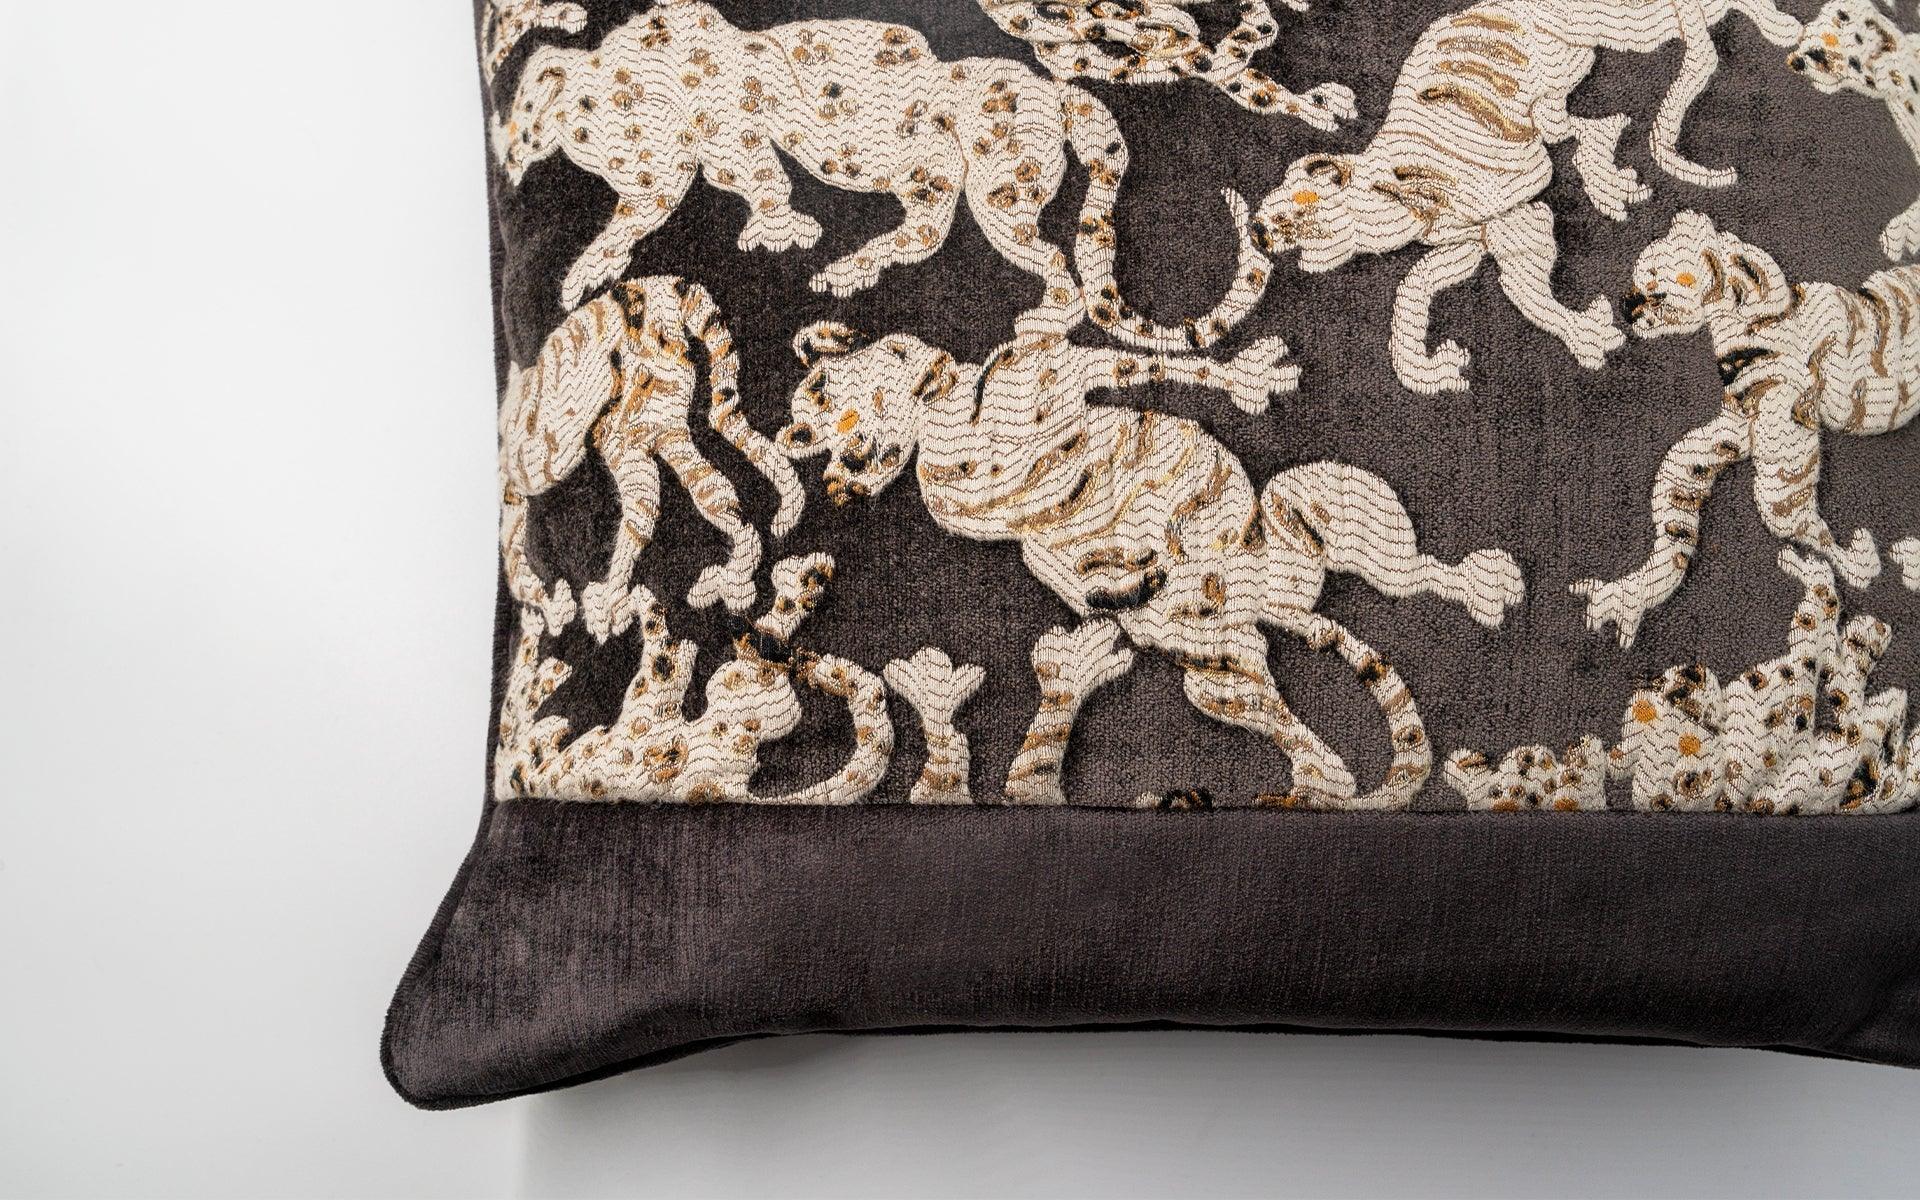 Woven Tiger Pattern Throw Pillow Large - laguglobal